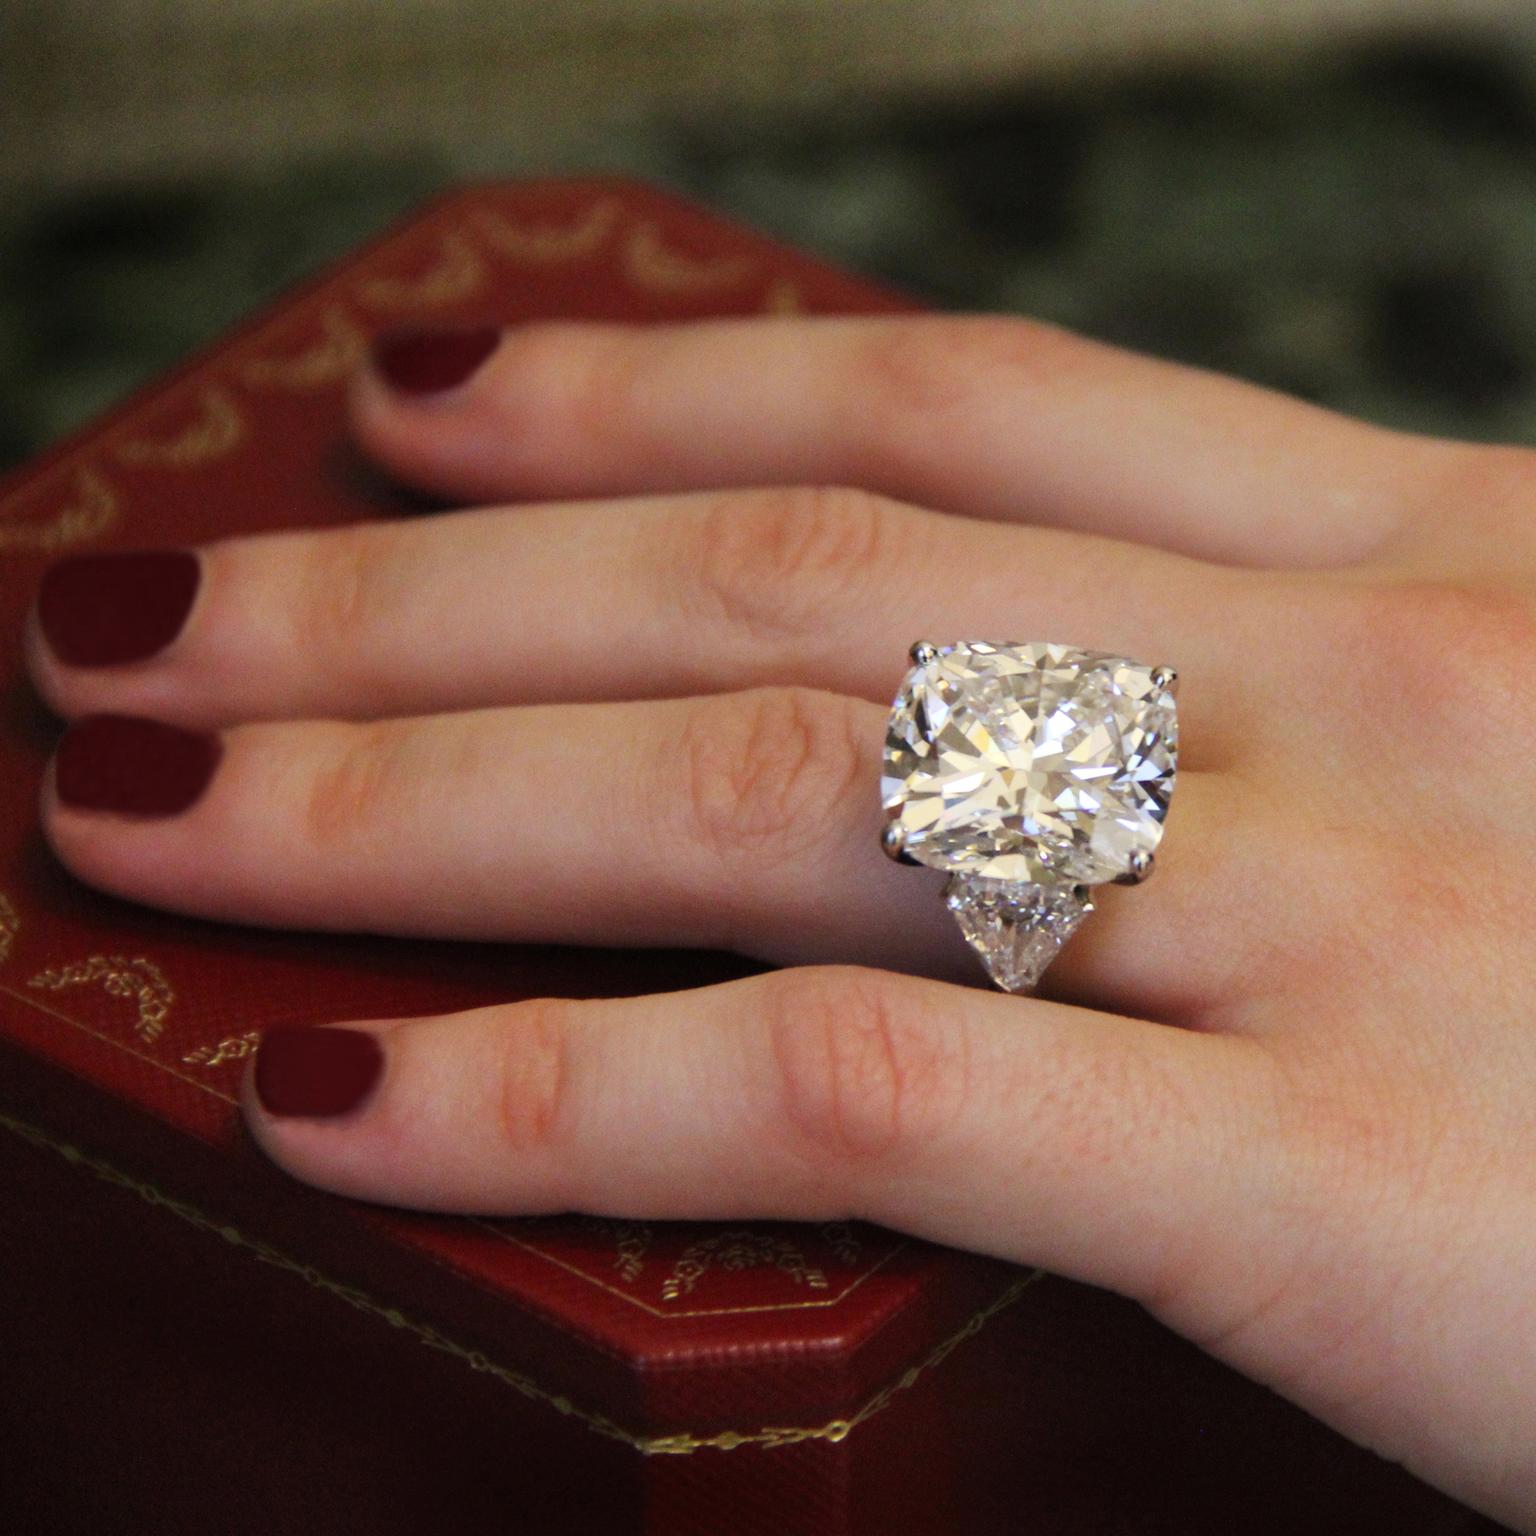 6 carat diamond ring cartier